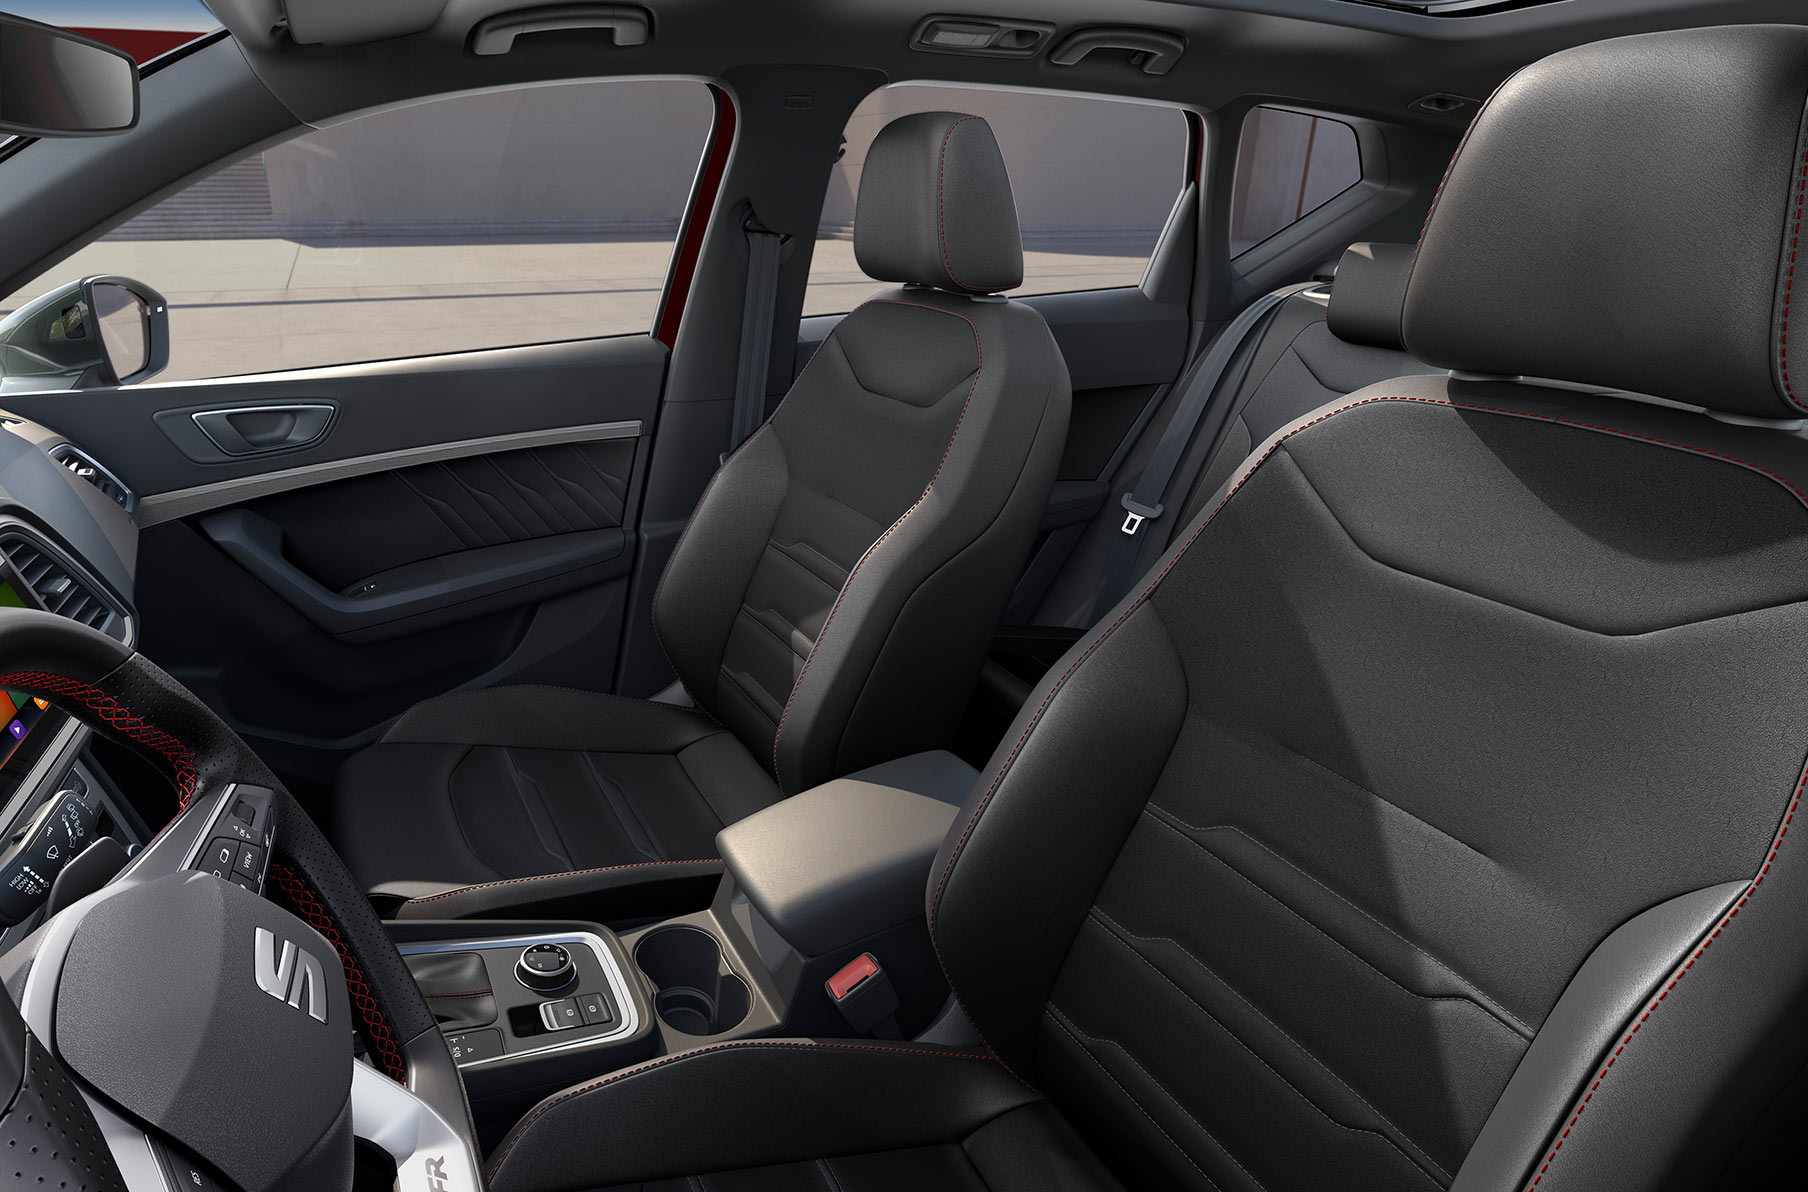 seat-ateca-interior-view-of-leather-seats